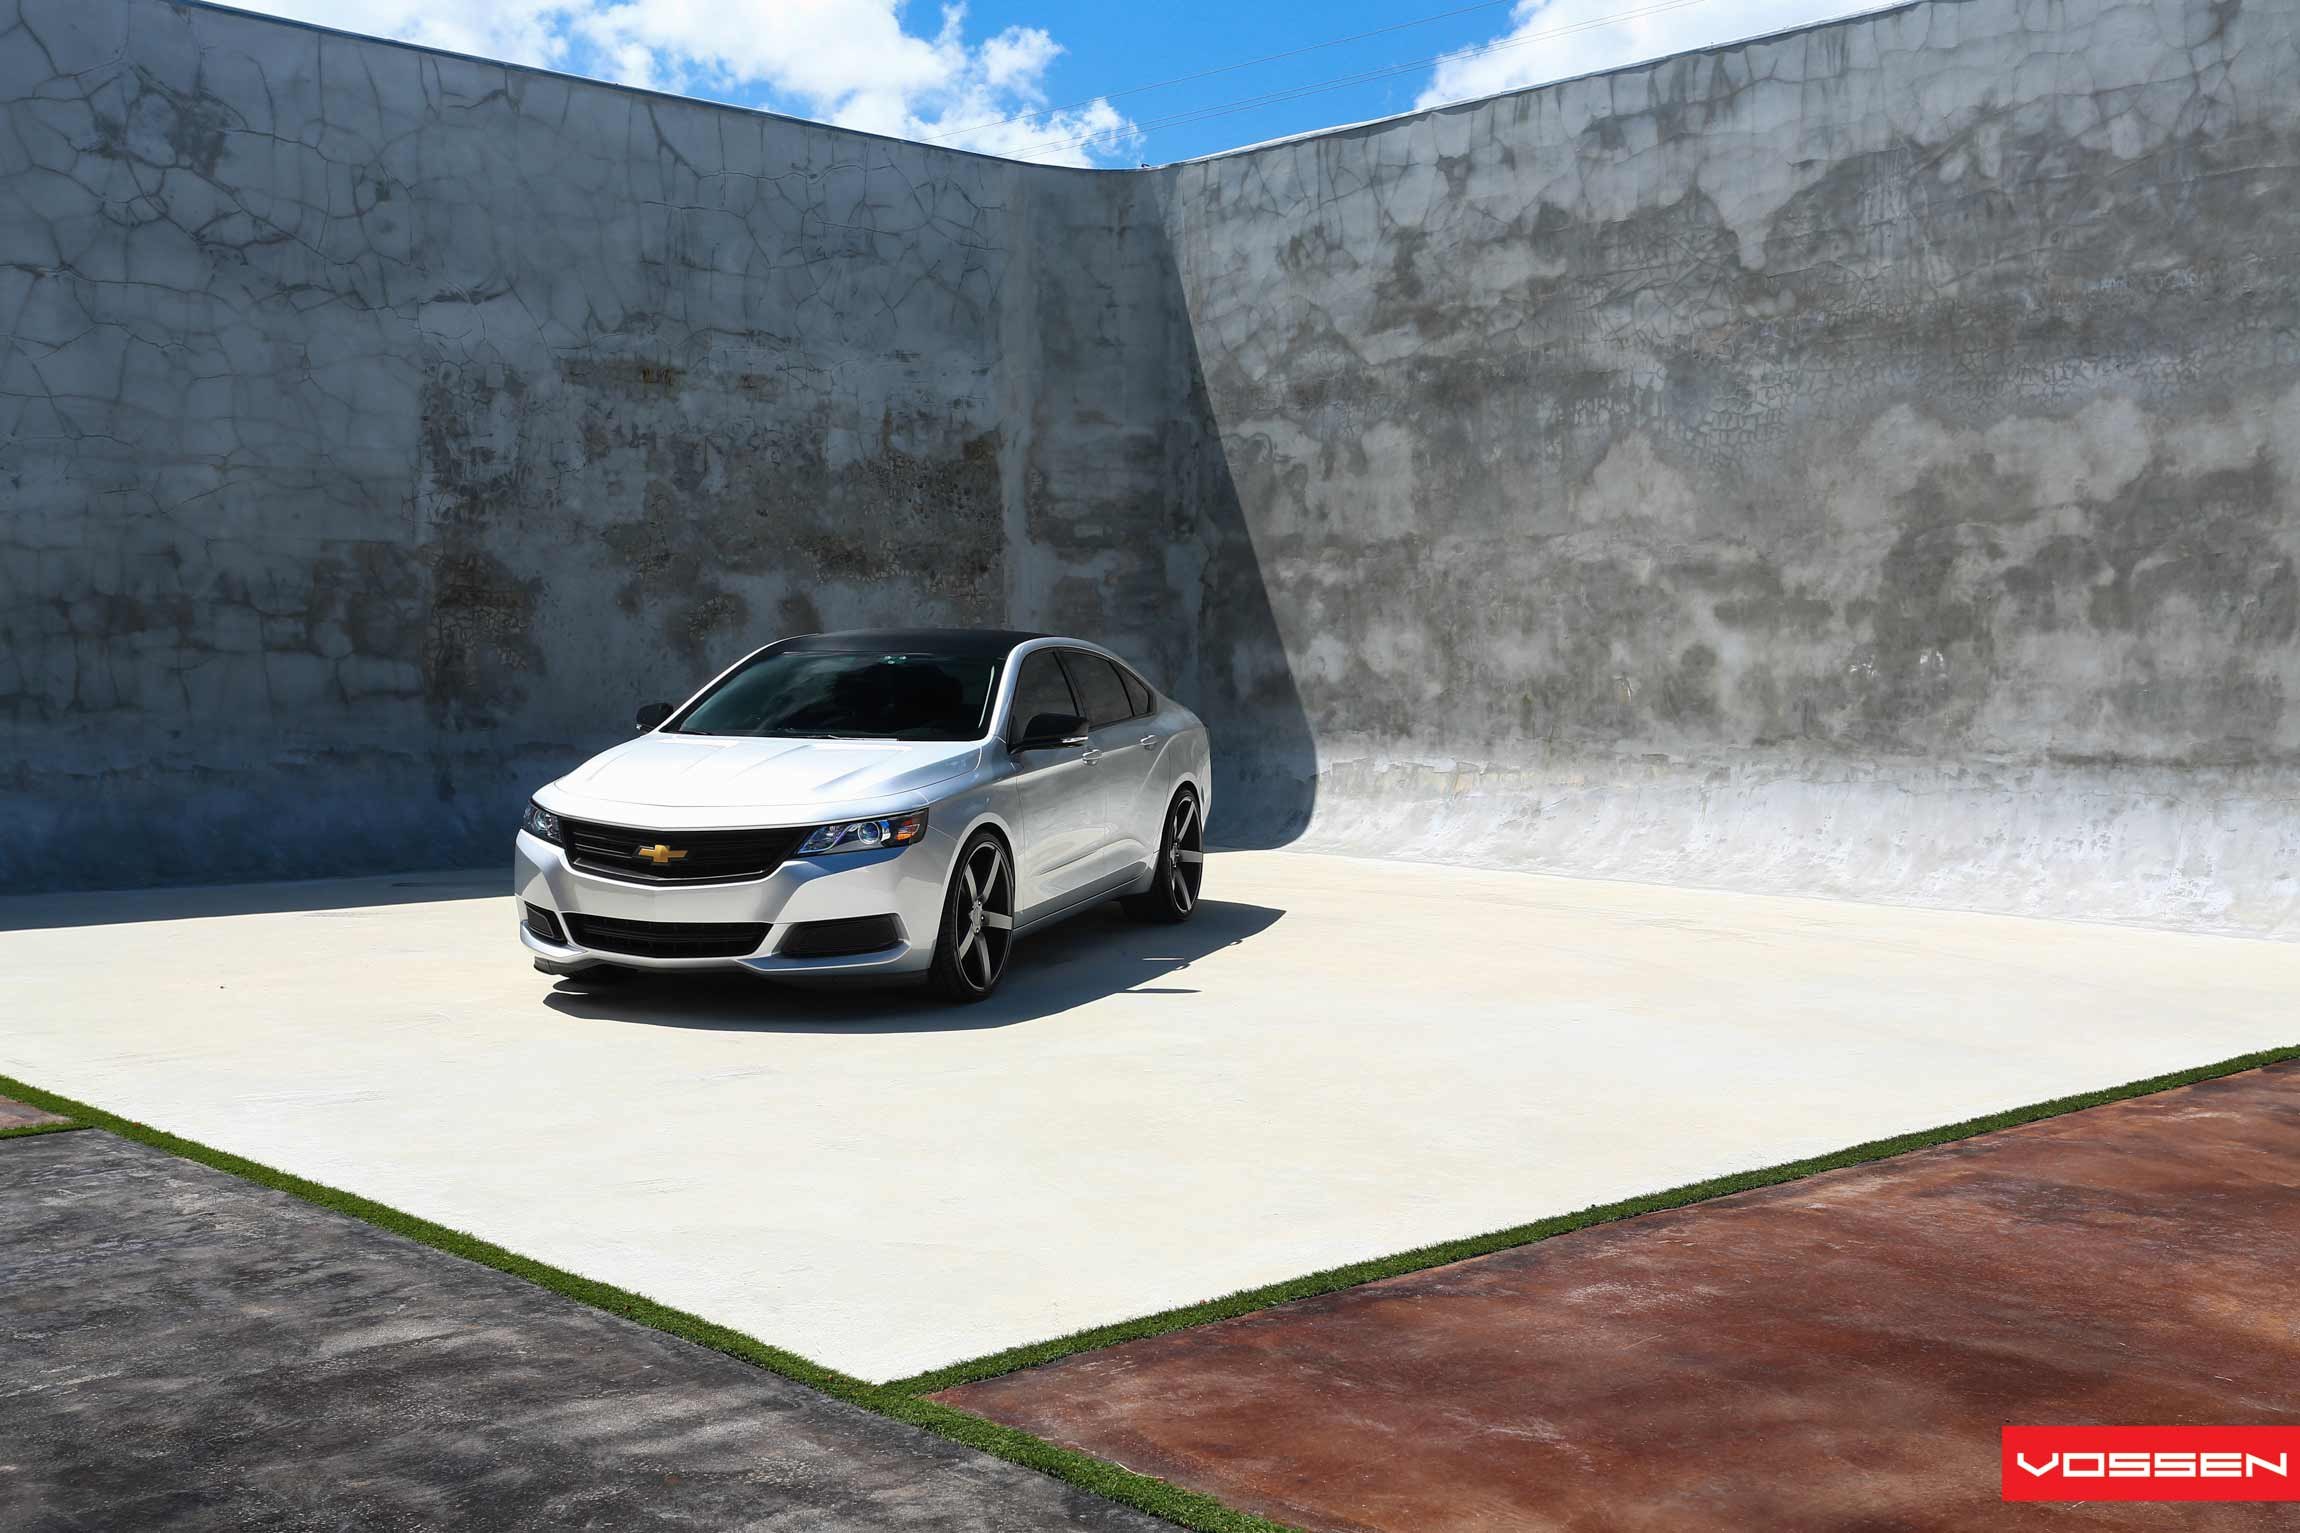 Silver Chevy Impala with Custom Chrome Vossen Wheels - Photo by Vossen